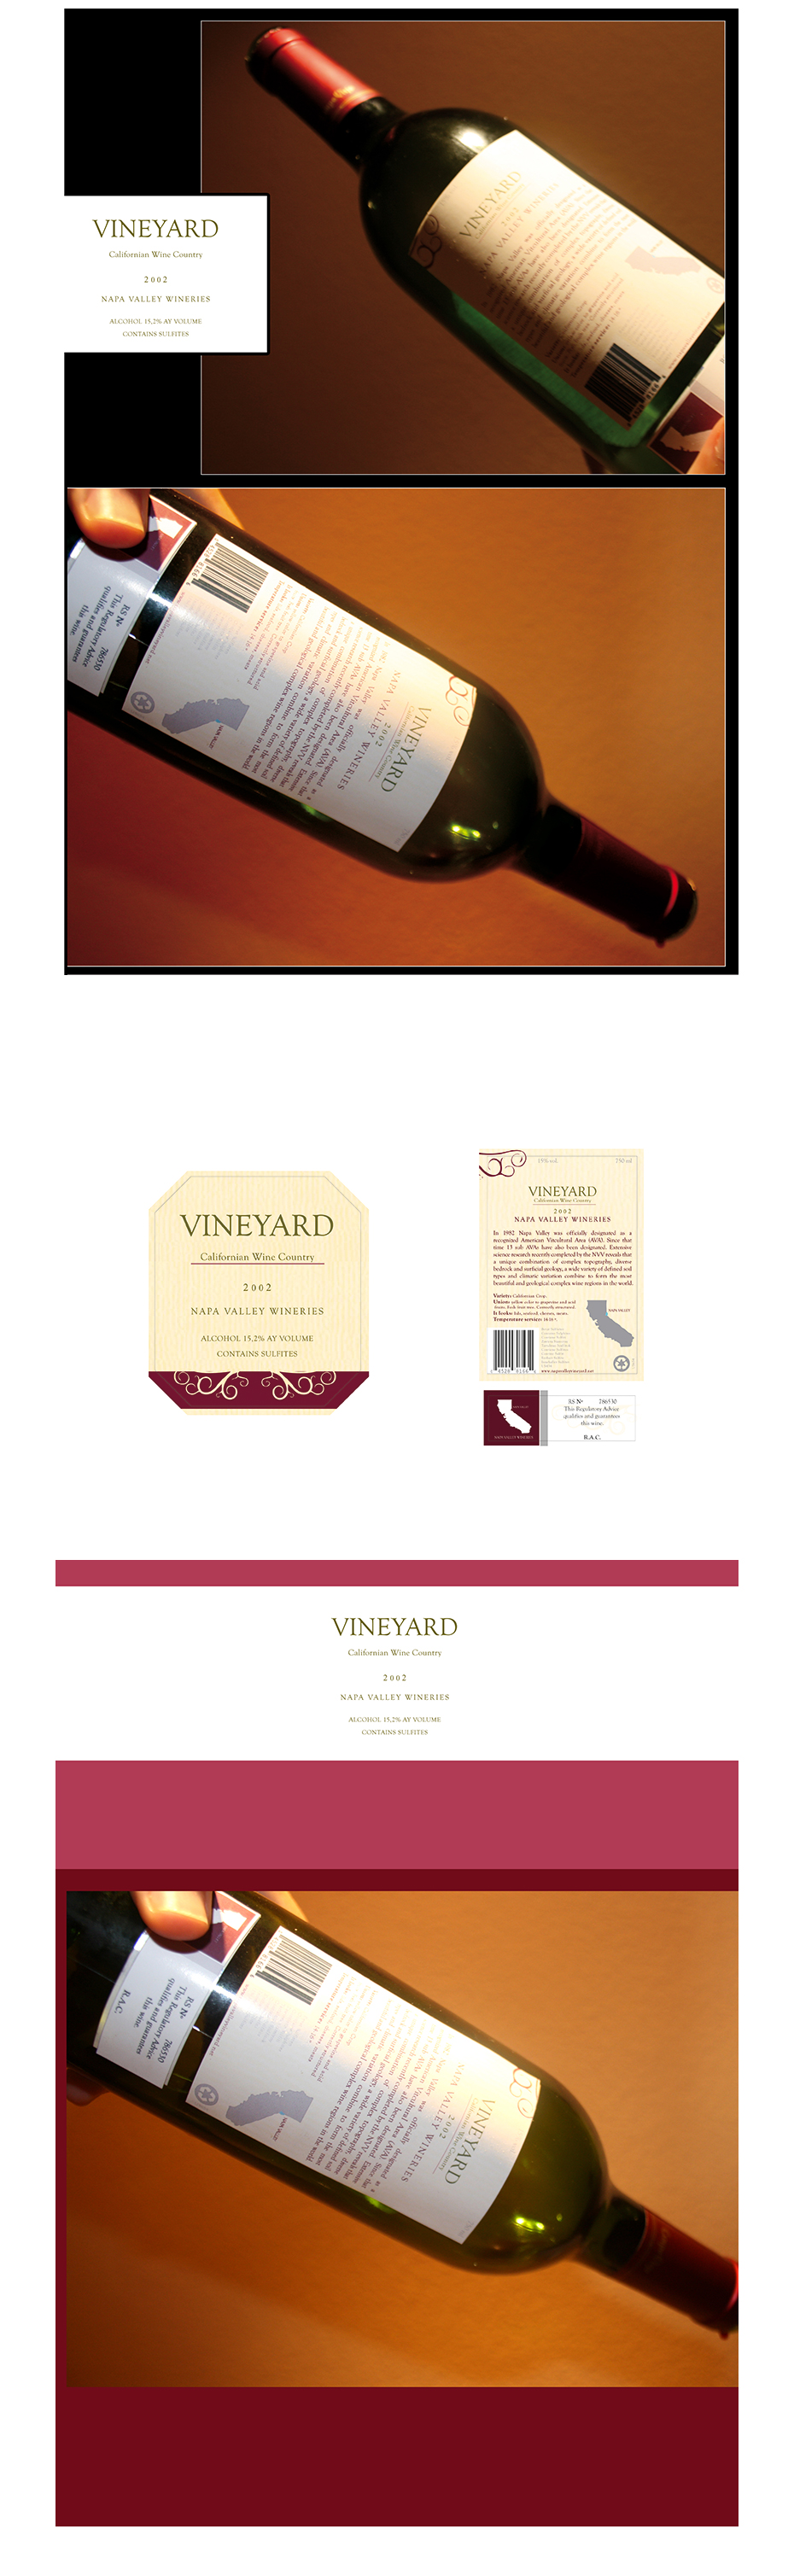 Vineyard California wines piezas